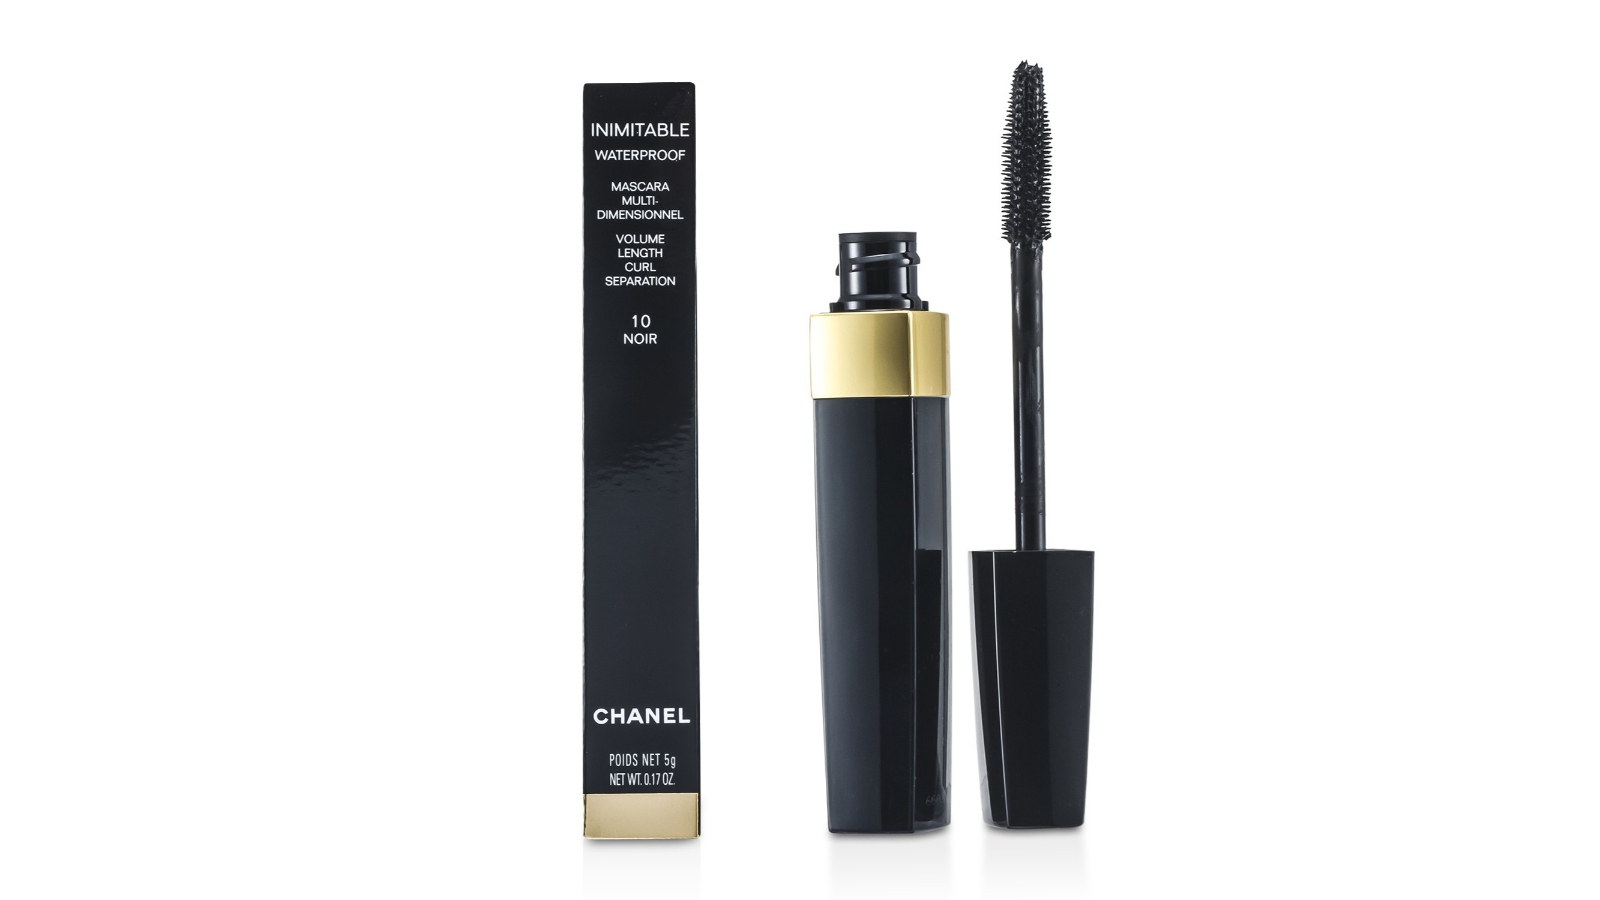 Chanel Inimitable Intense Mascara – Noir Review